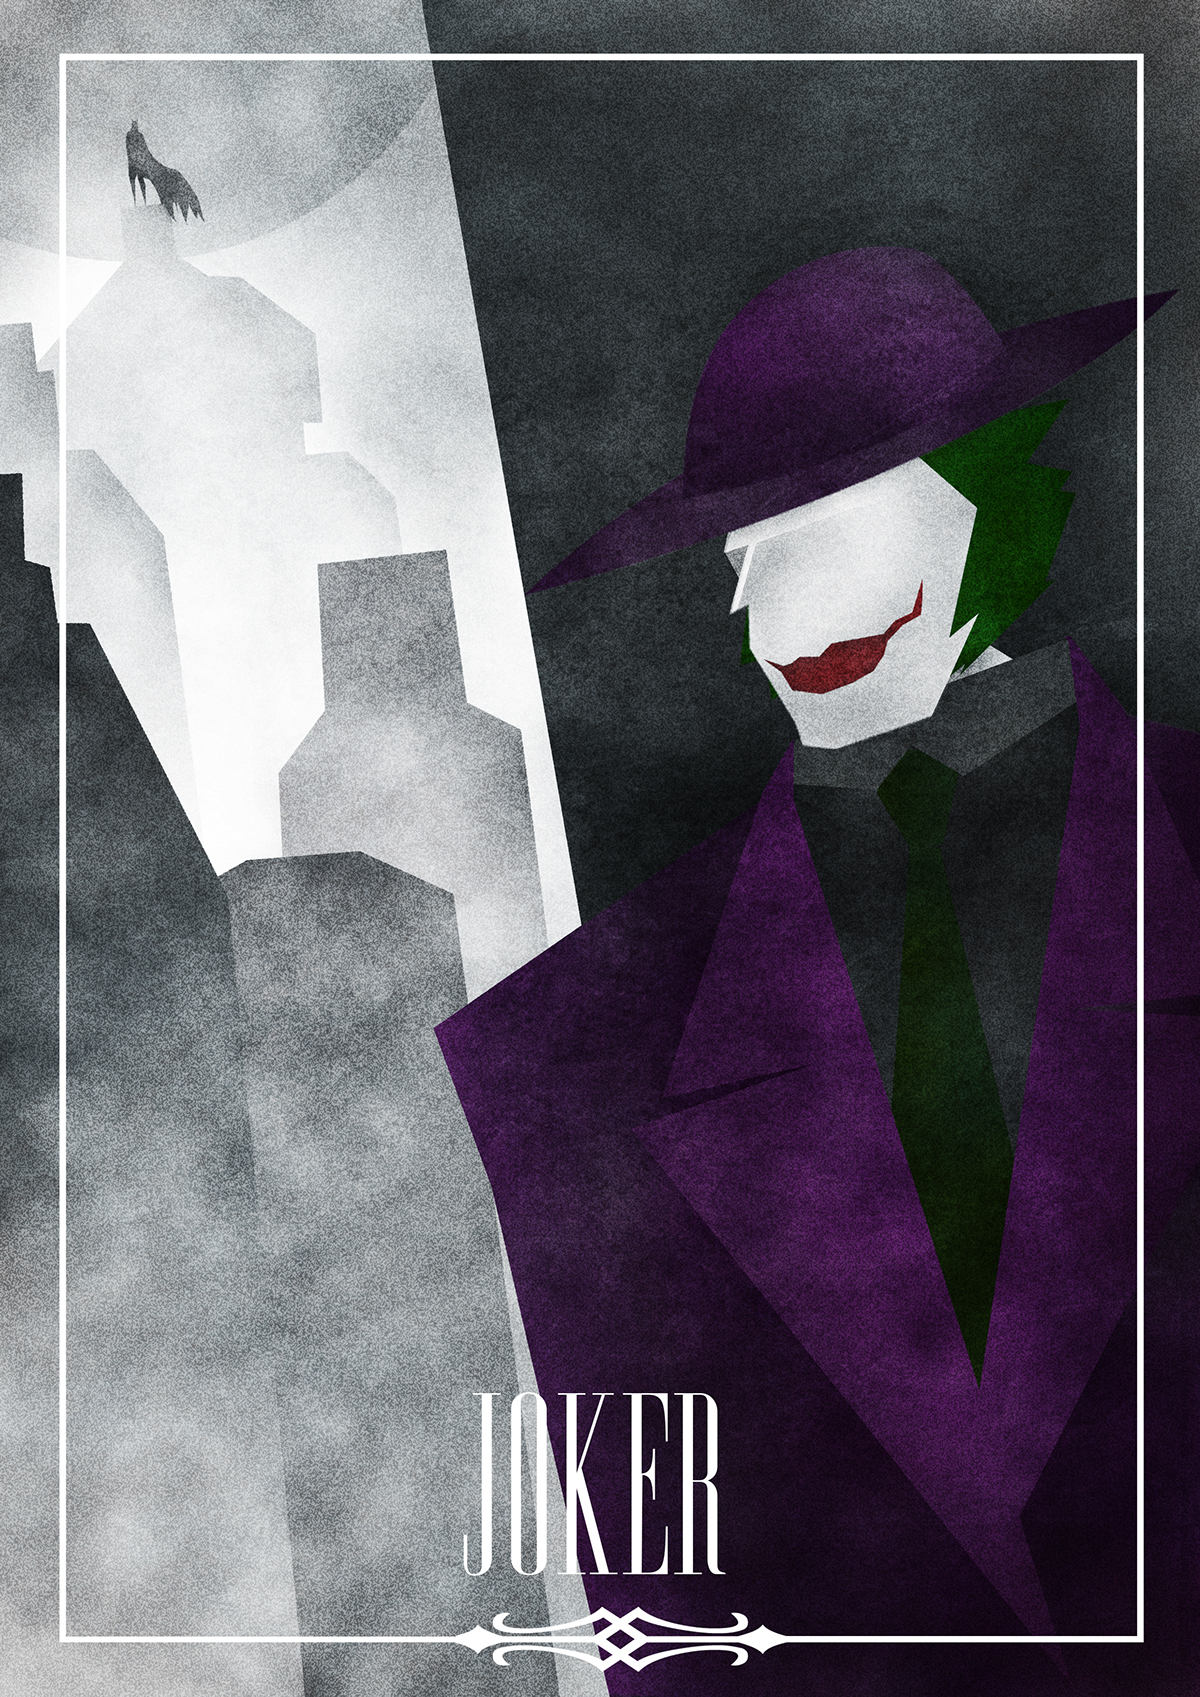 batman penguin joker Bane gotham city shadow minimalist comic dc SuperHero villain